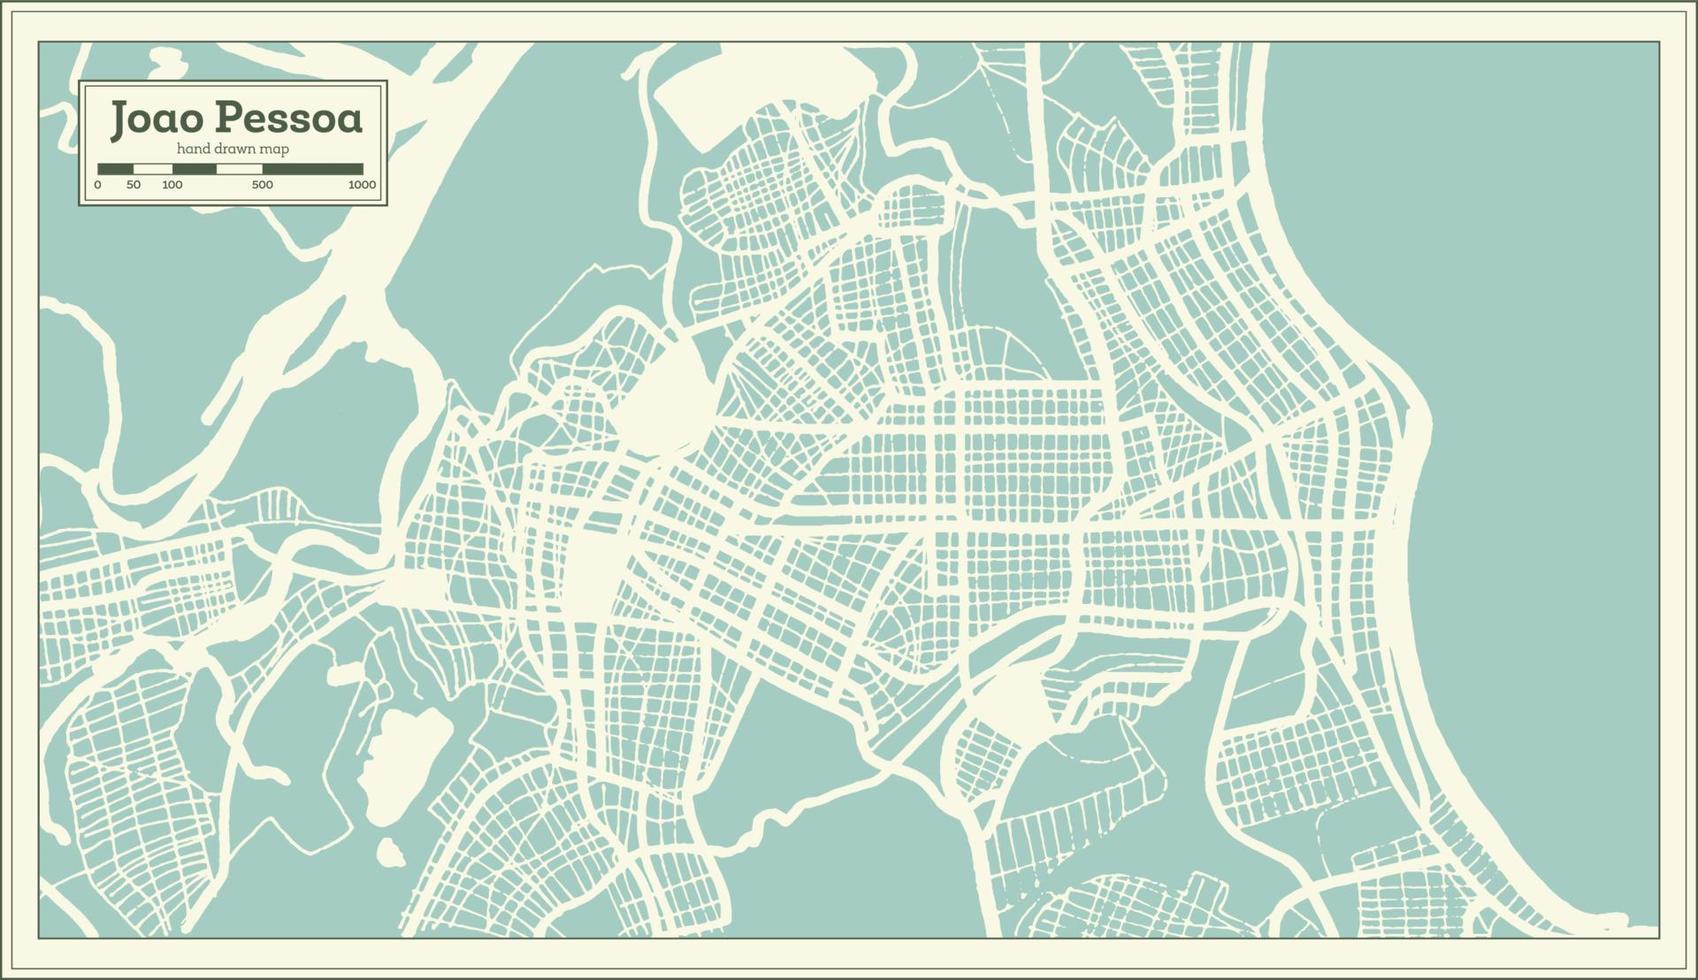 joao Pessoa brasile città carta geografica nel retrò stile. schema carta geografica. vettore